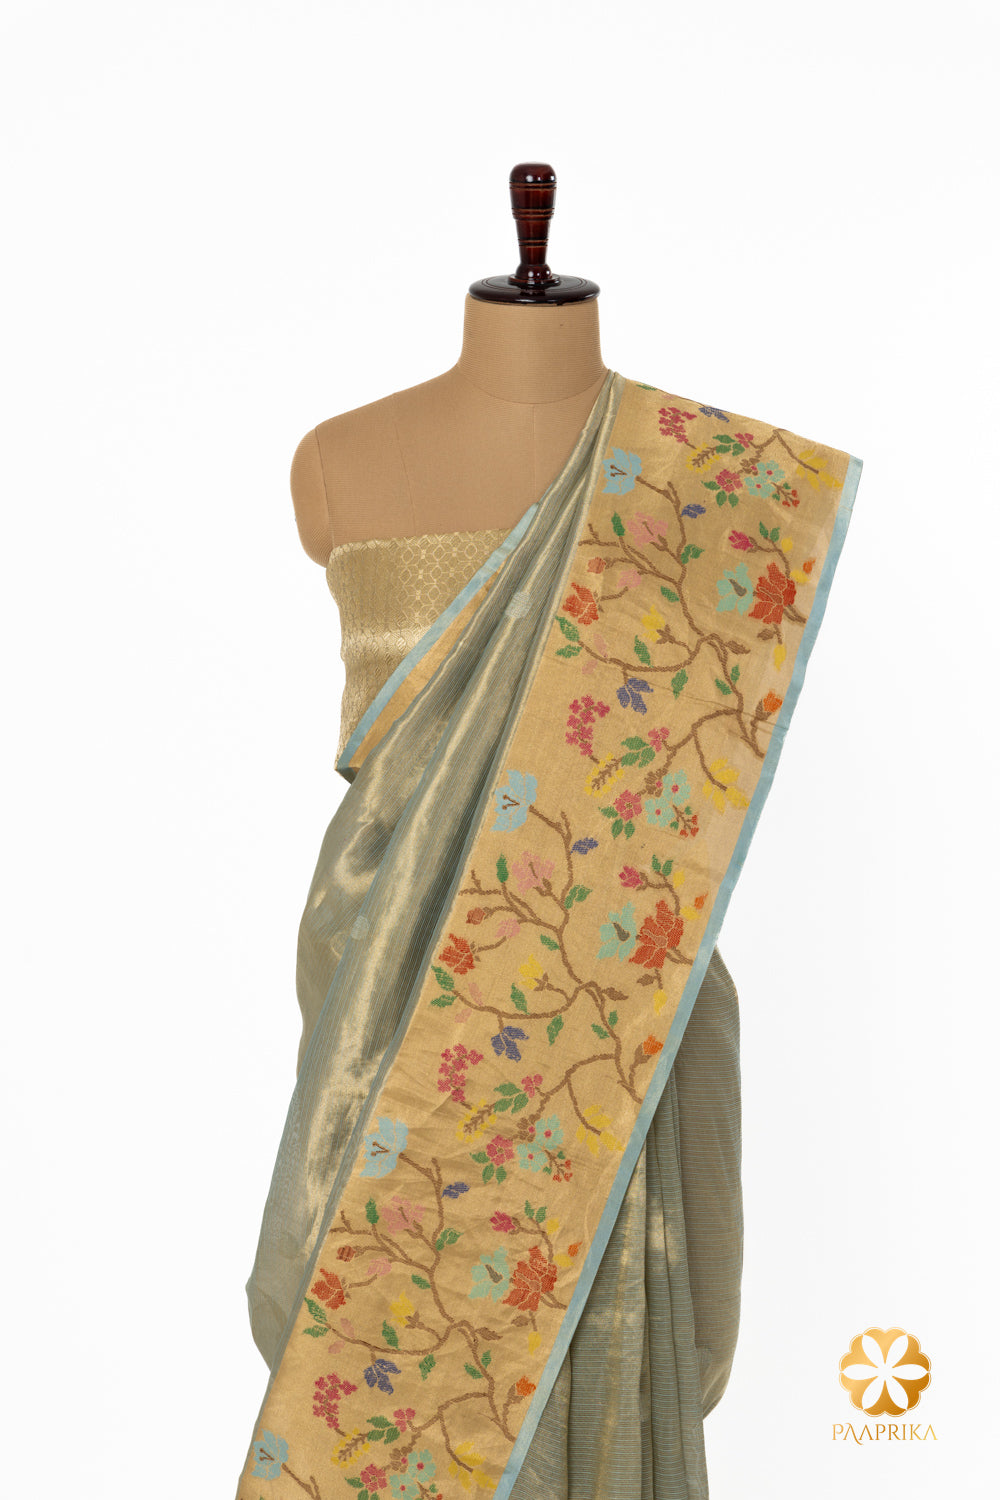 The entire saree elegantly displayed, showcasing its opulent design.